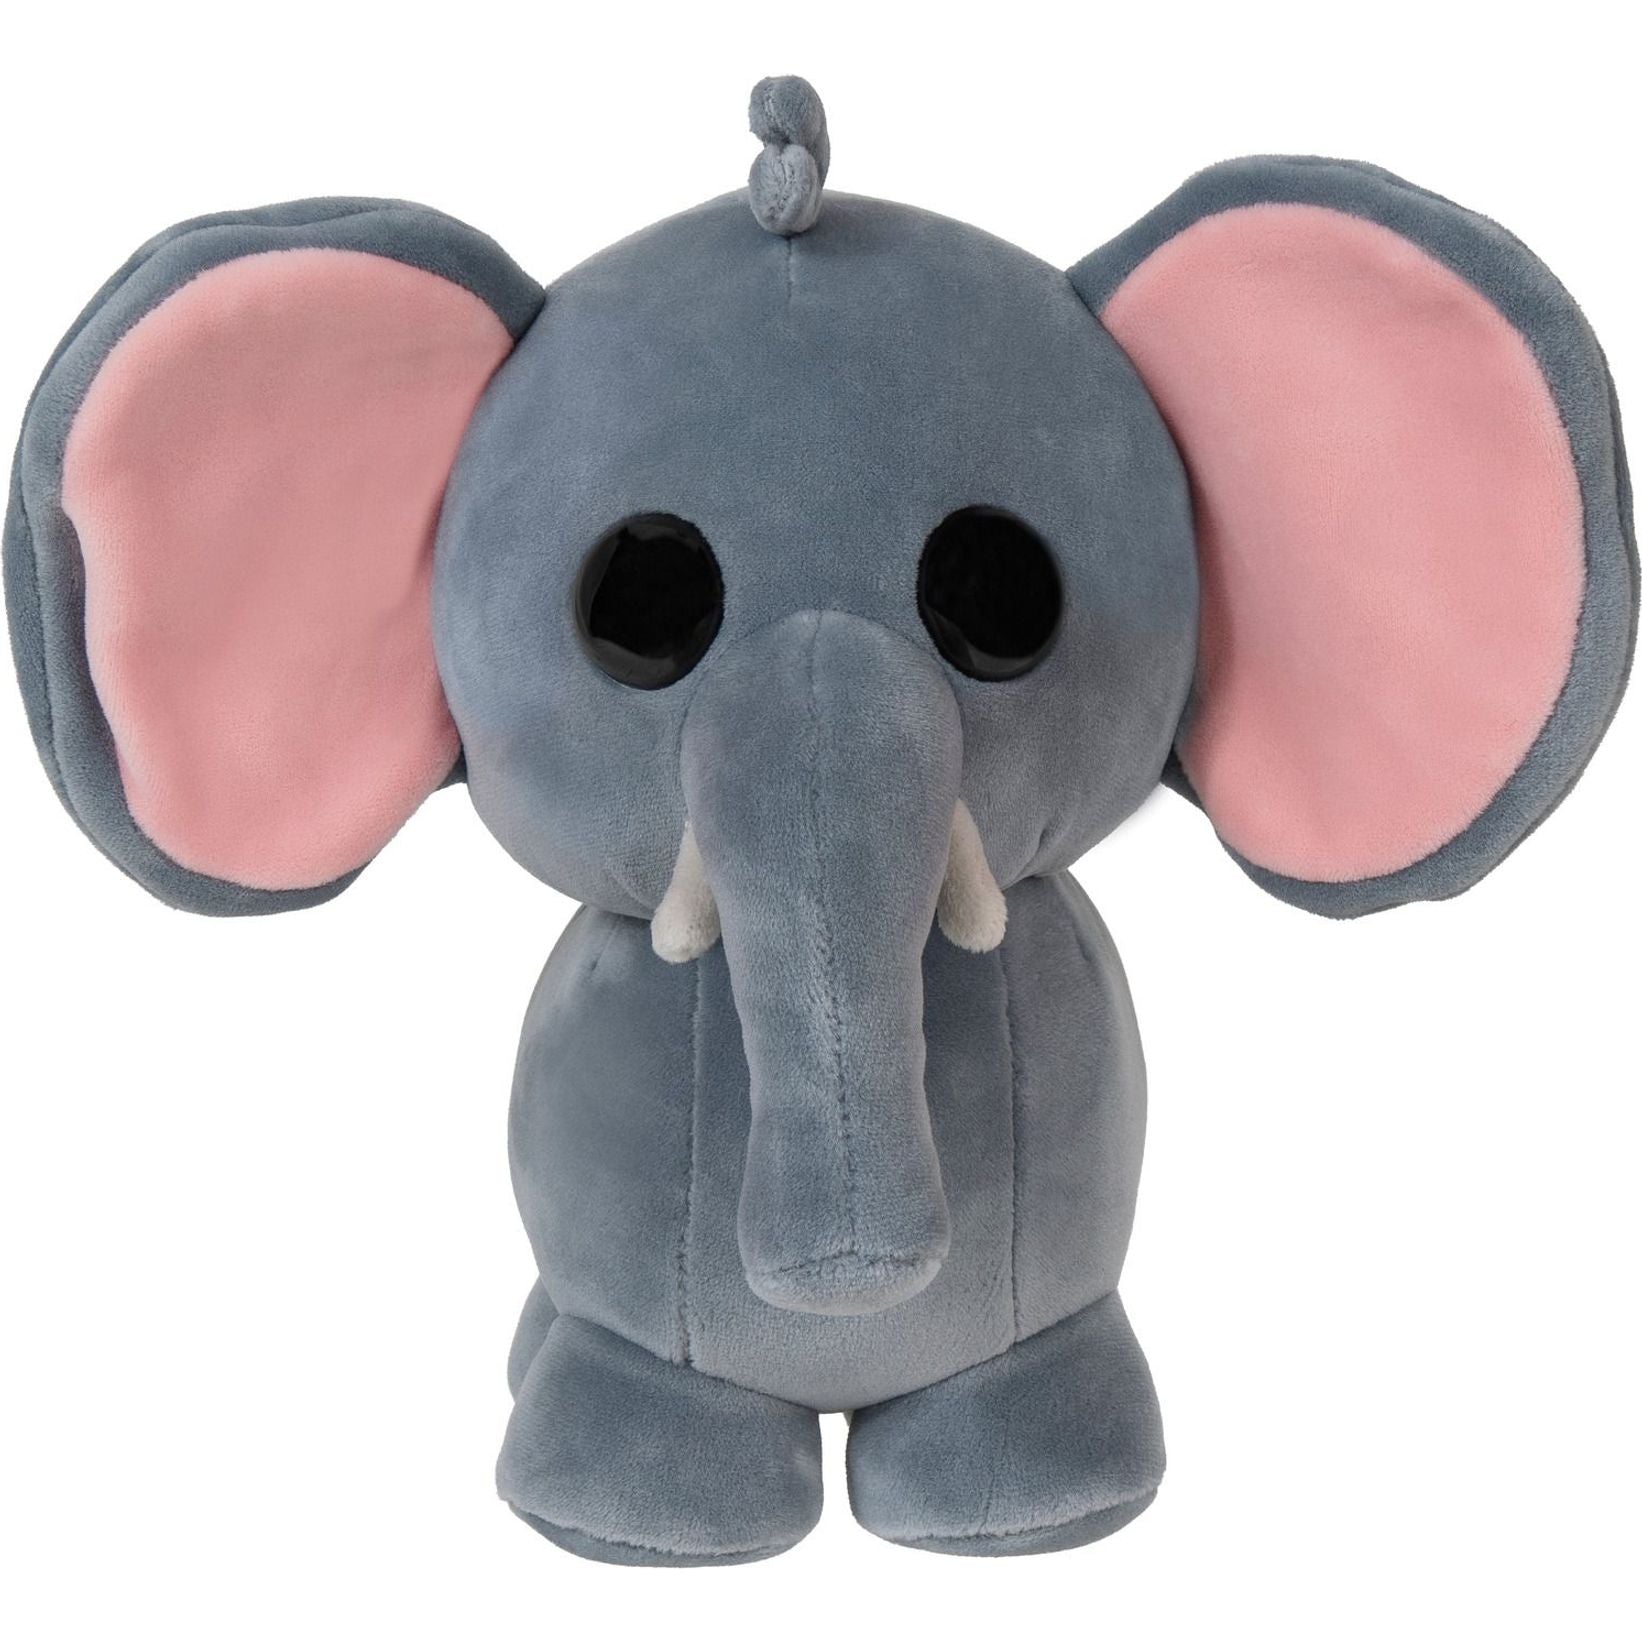 Adopt Me 8" Elephant Collector Plush Adopt Me